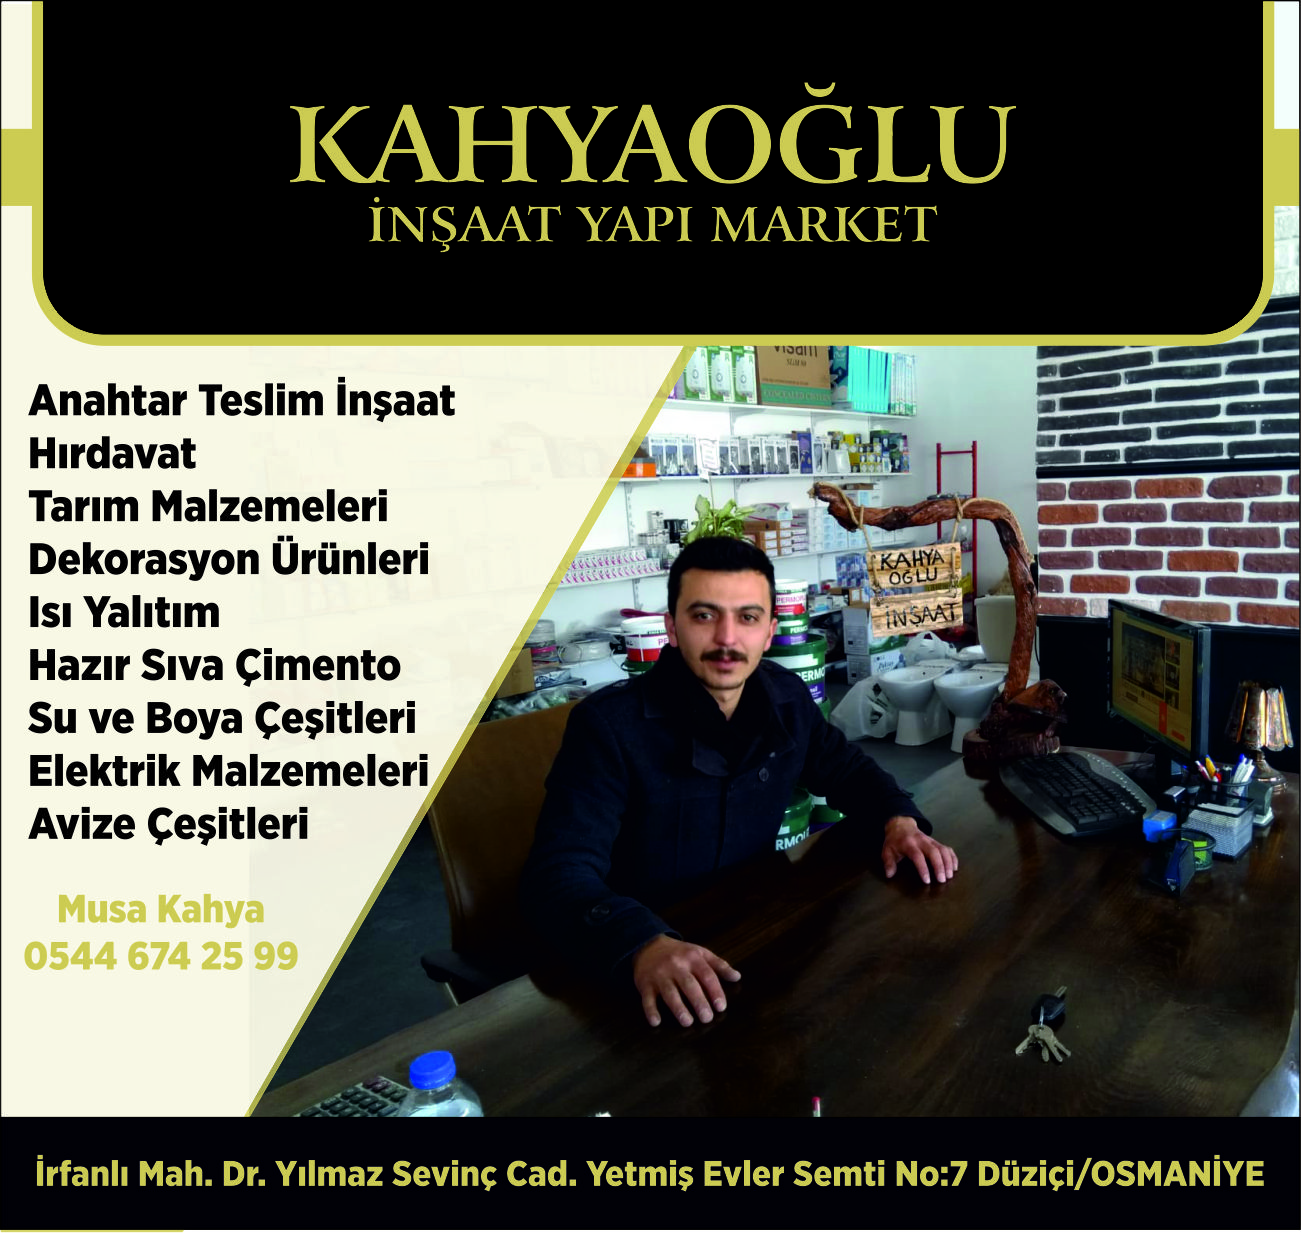 kahyaoglu-insaat-yapi-market-osmaniye